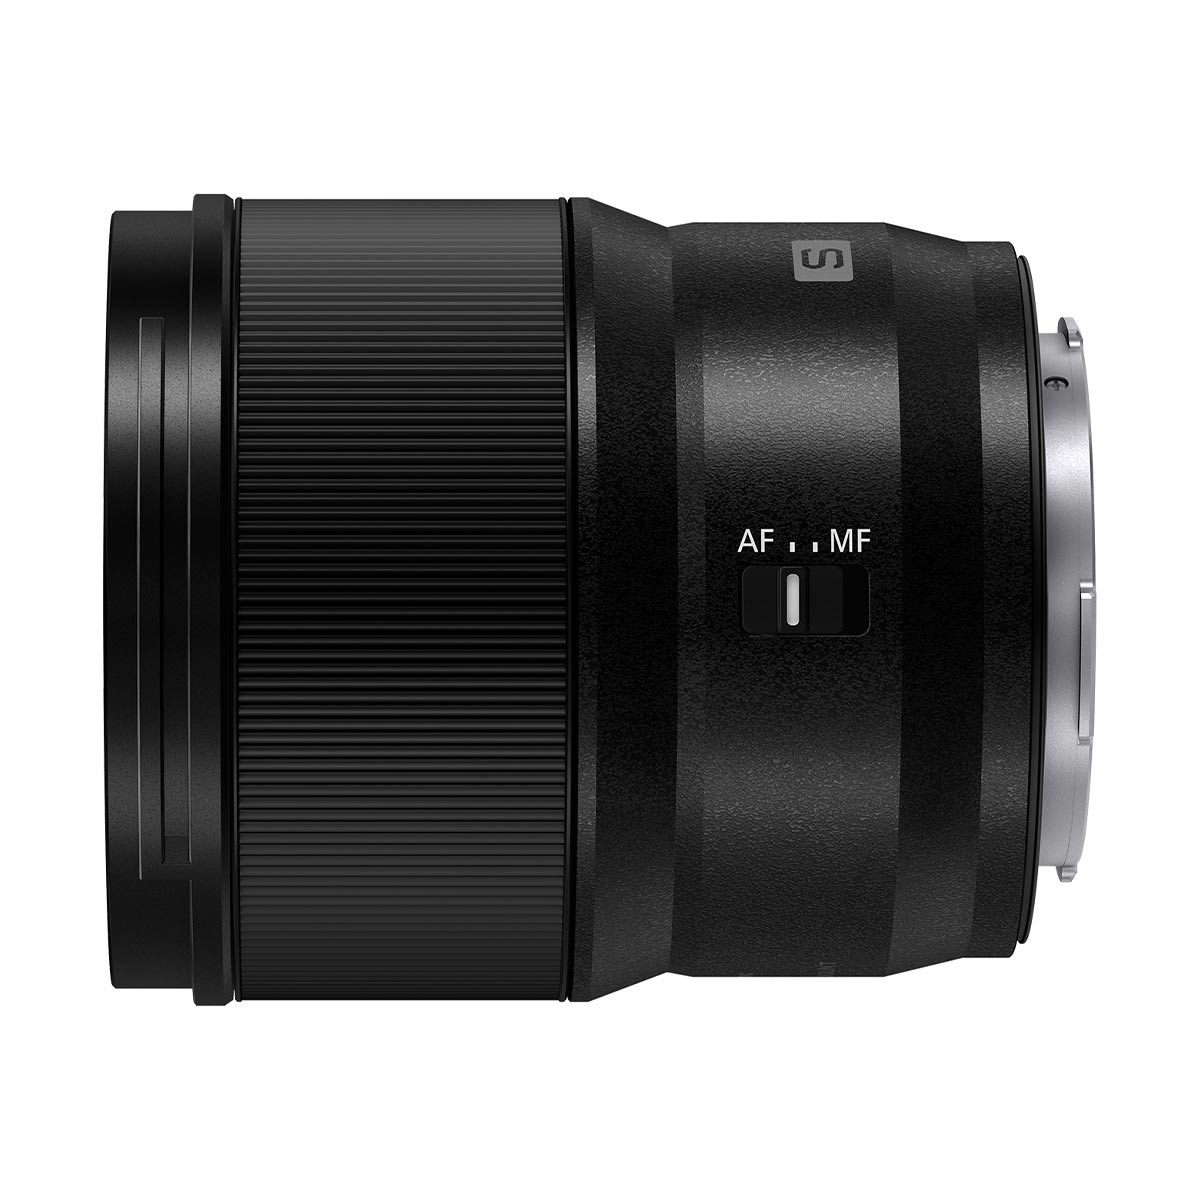 Panasonic LUMIX S 18mm f/1.8 Lens